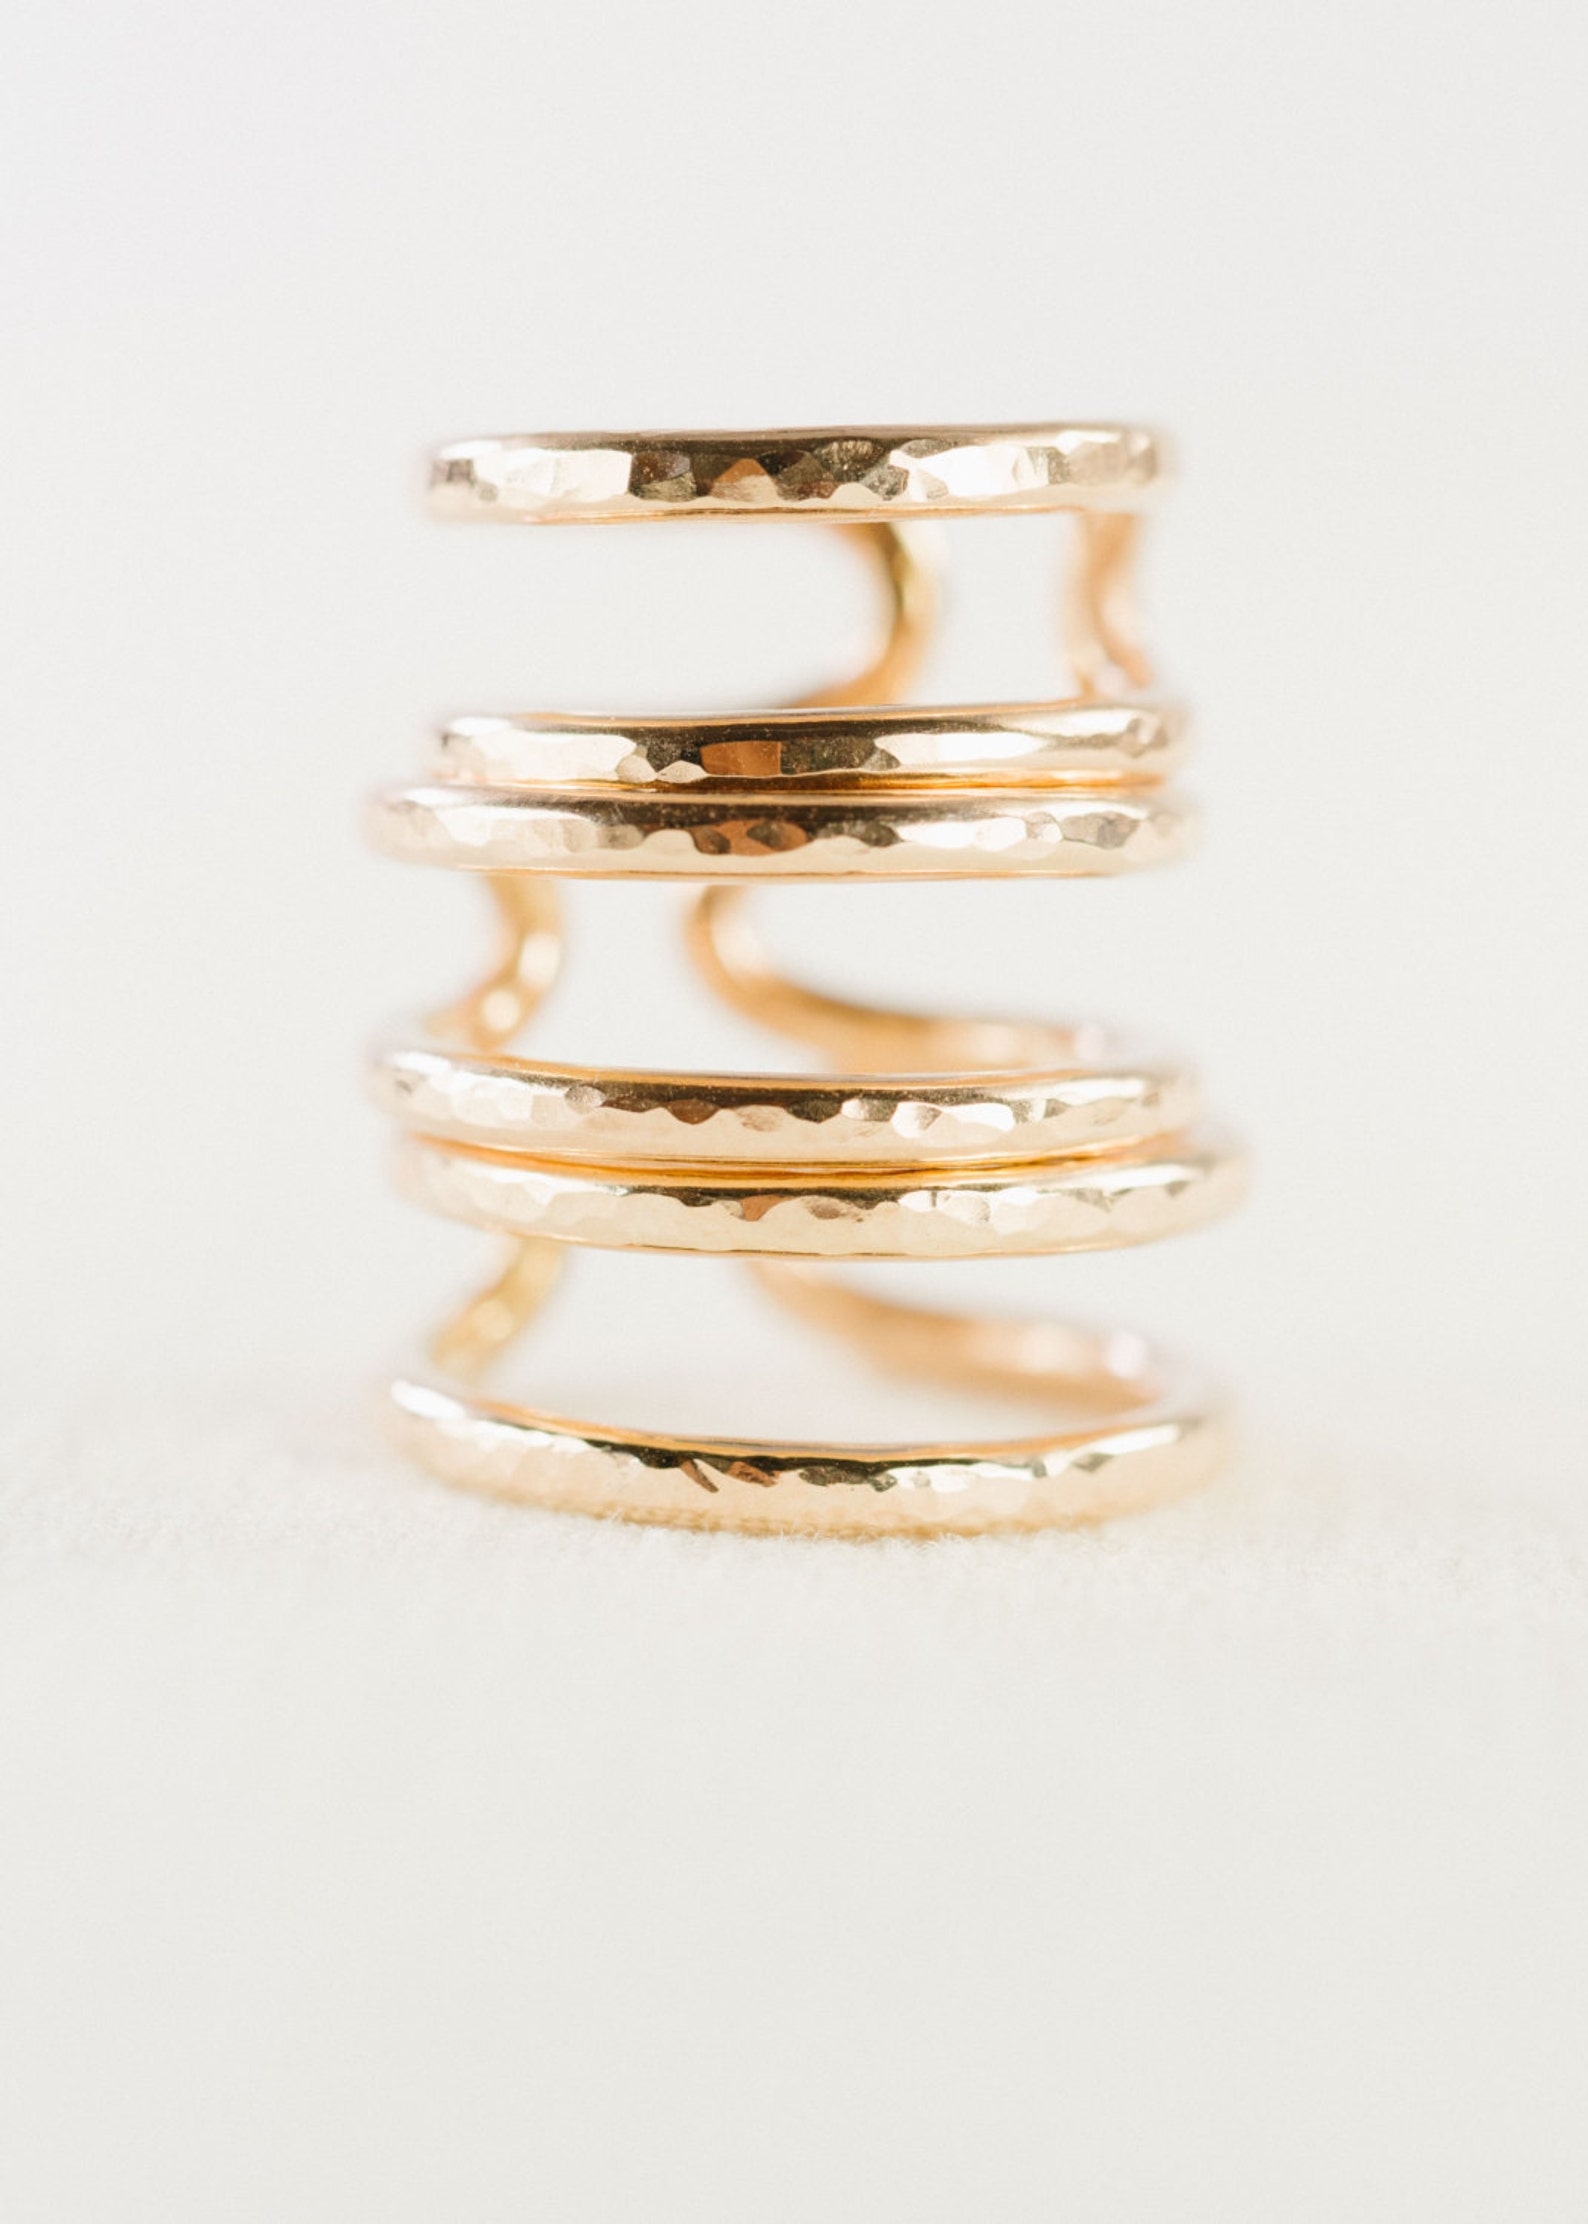 Kau'i ring gold rings cuff ring stacking ring | Etsy